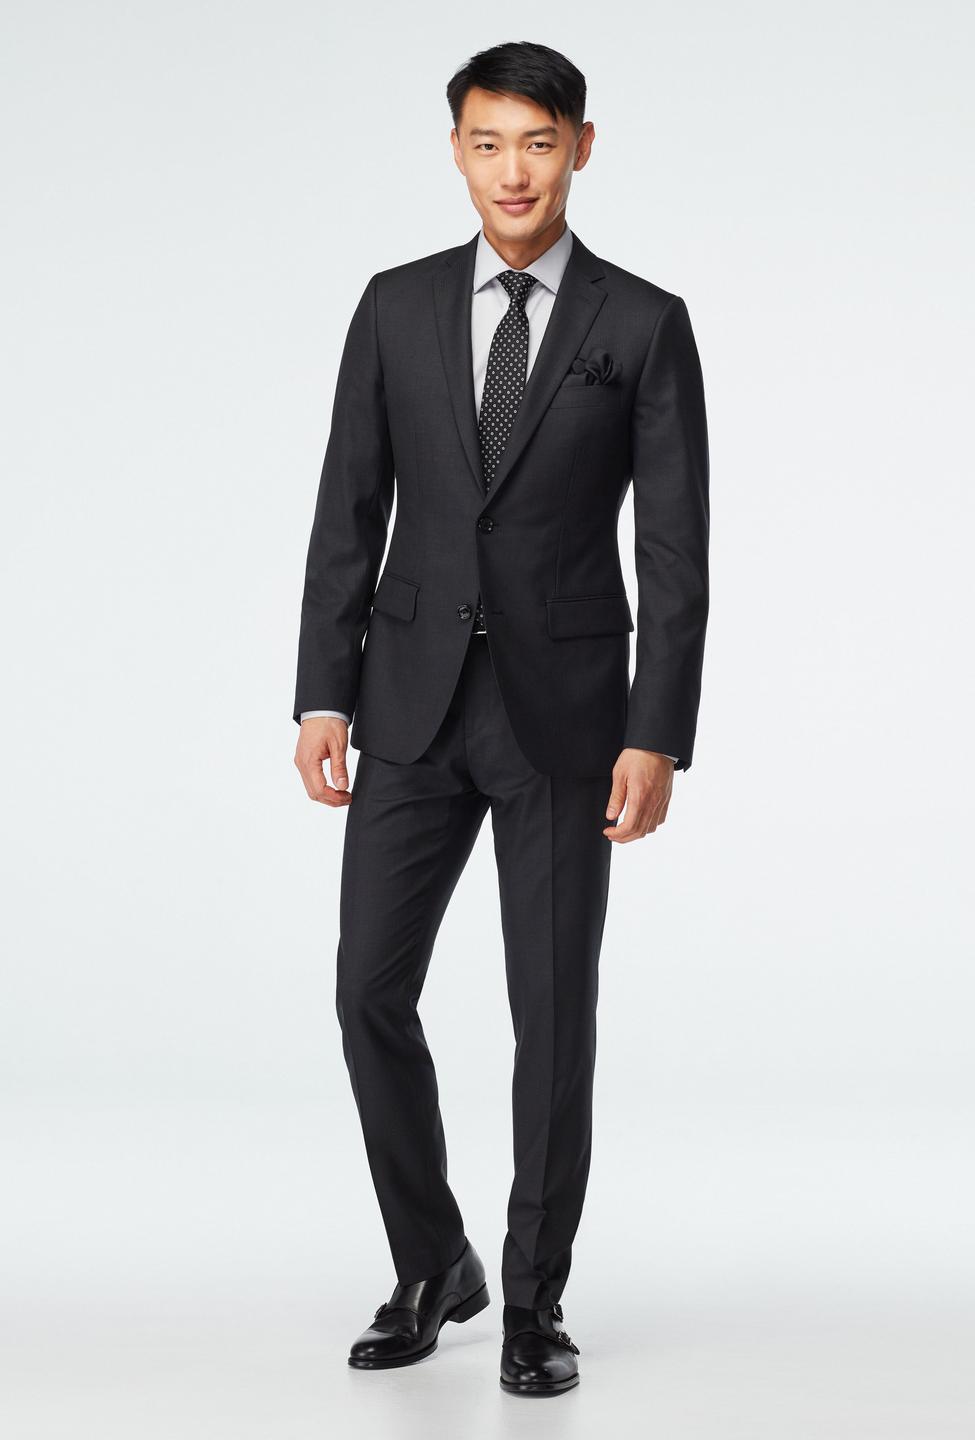 Highbridge Fineline Charcoal Suit